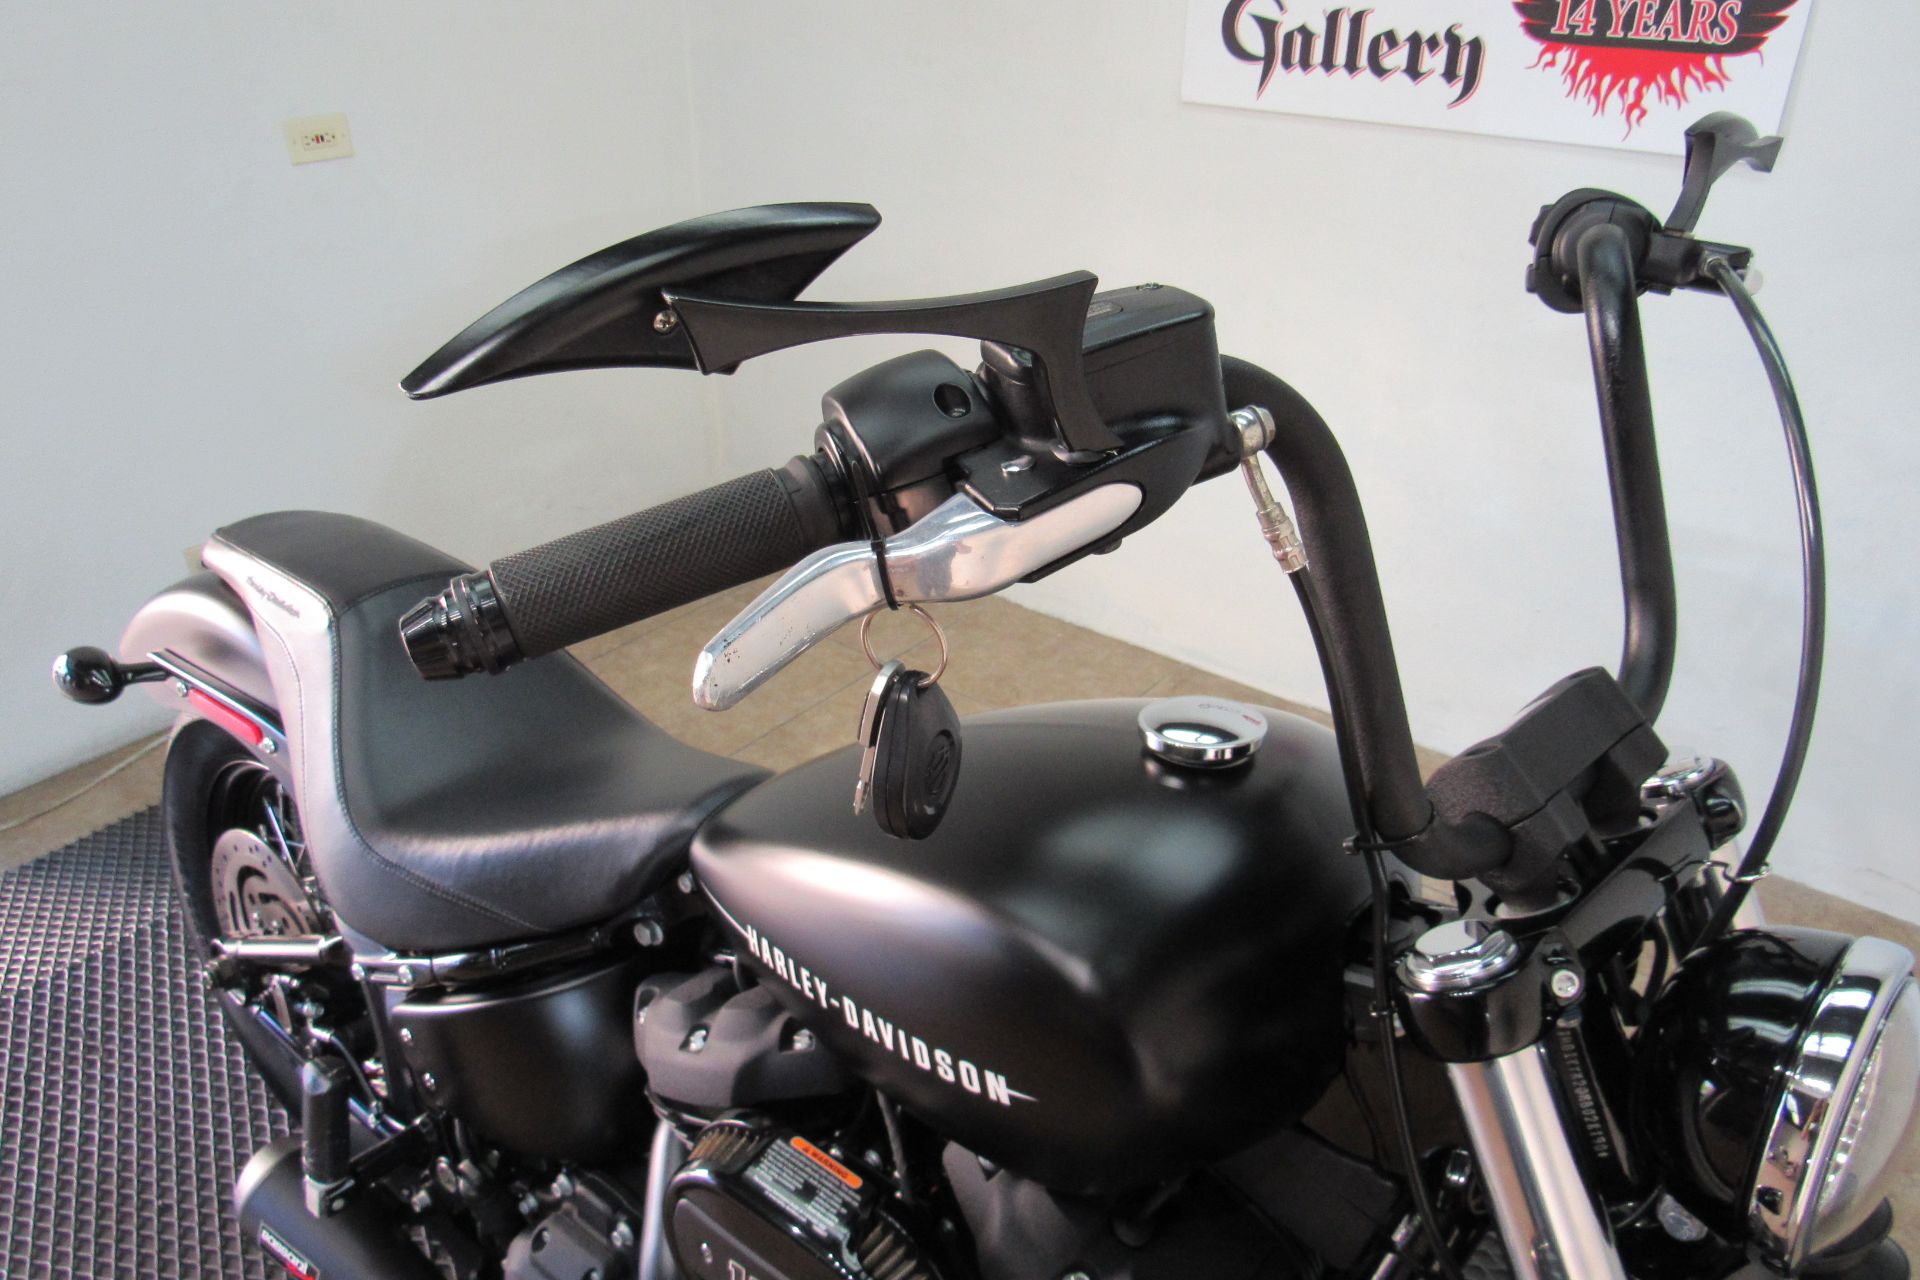 2021 Harley-Davidson Street Bob® 114 in Temecula, California - Photo 22